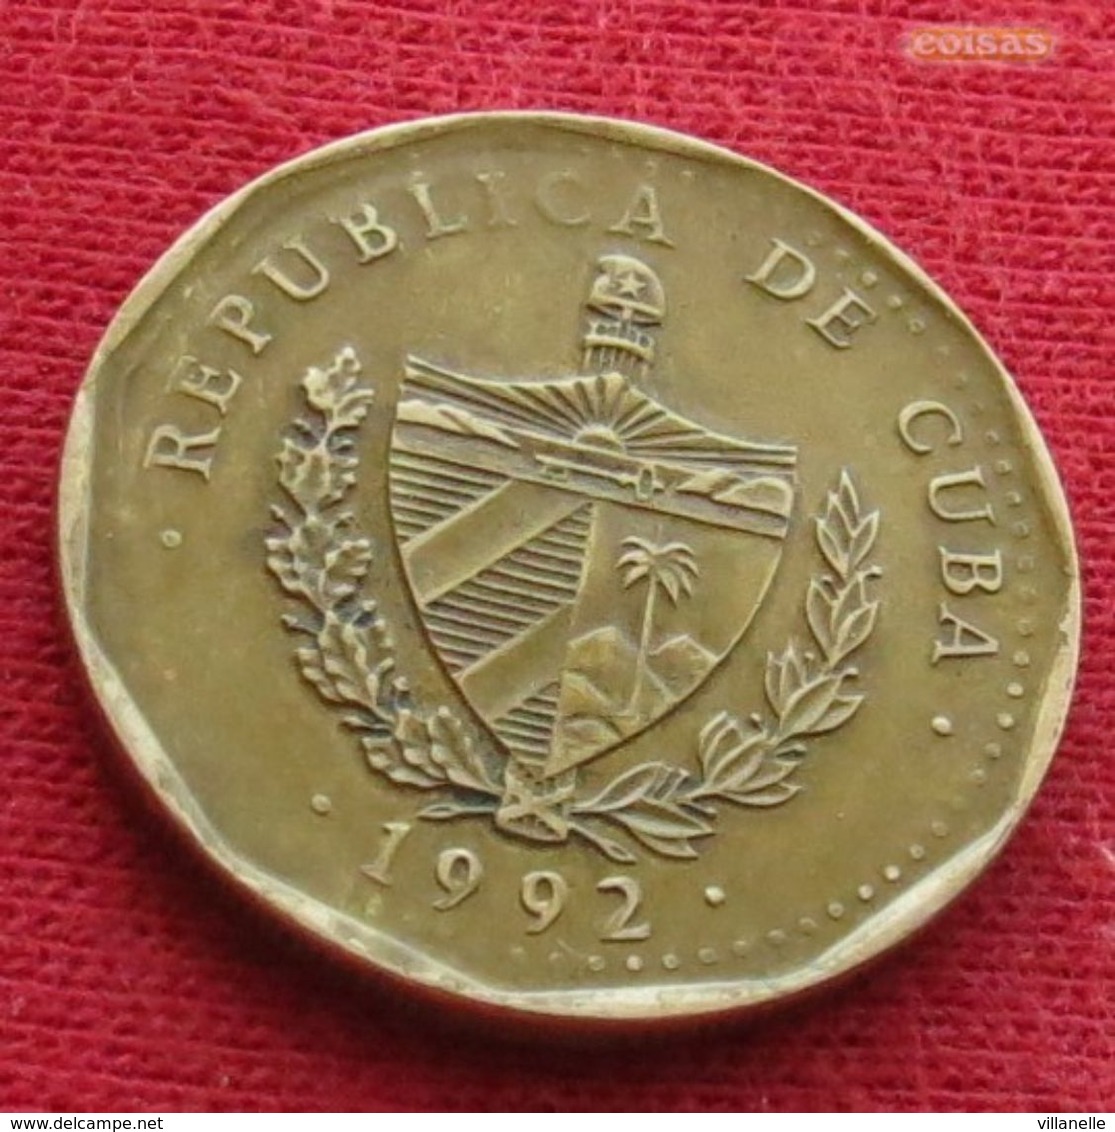 Cuba 1 Peso 1992 KM# 347 - Cuba